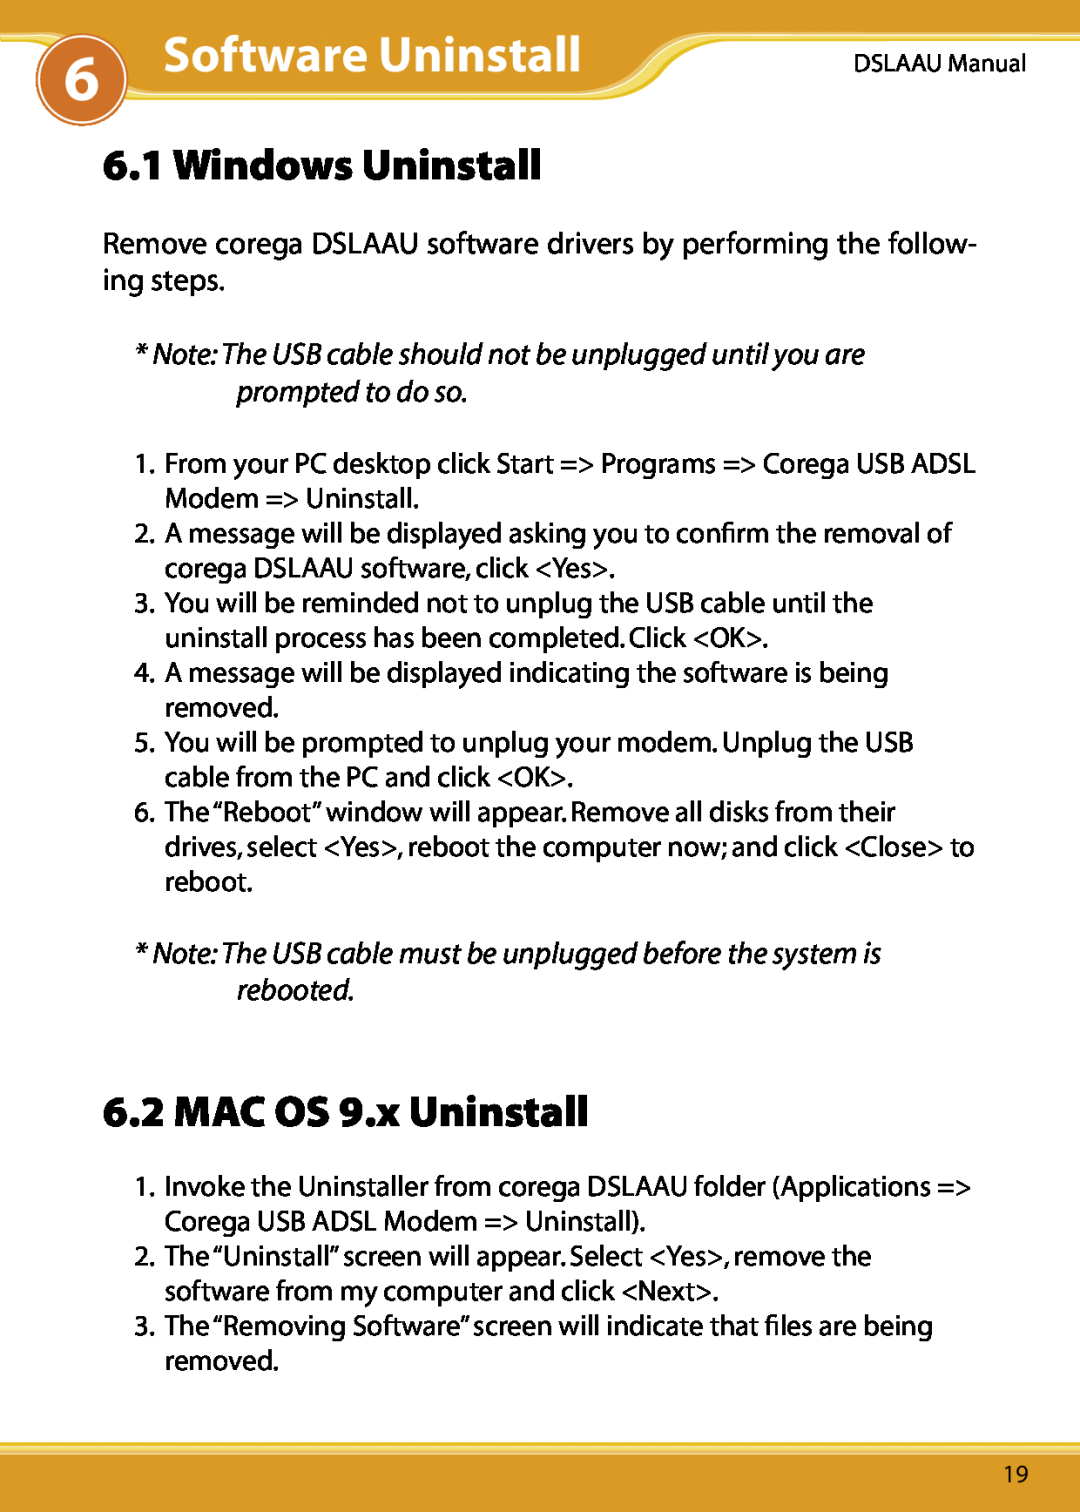 Corega DSLAAU user manual Software Uninstall, Windows Uninstall, MAC OS 9.x Uninstall 